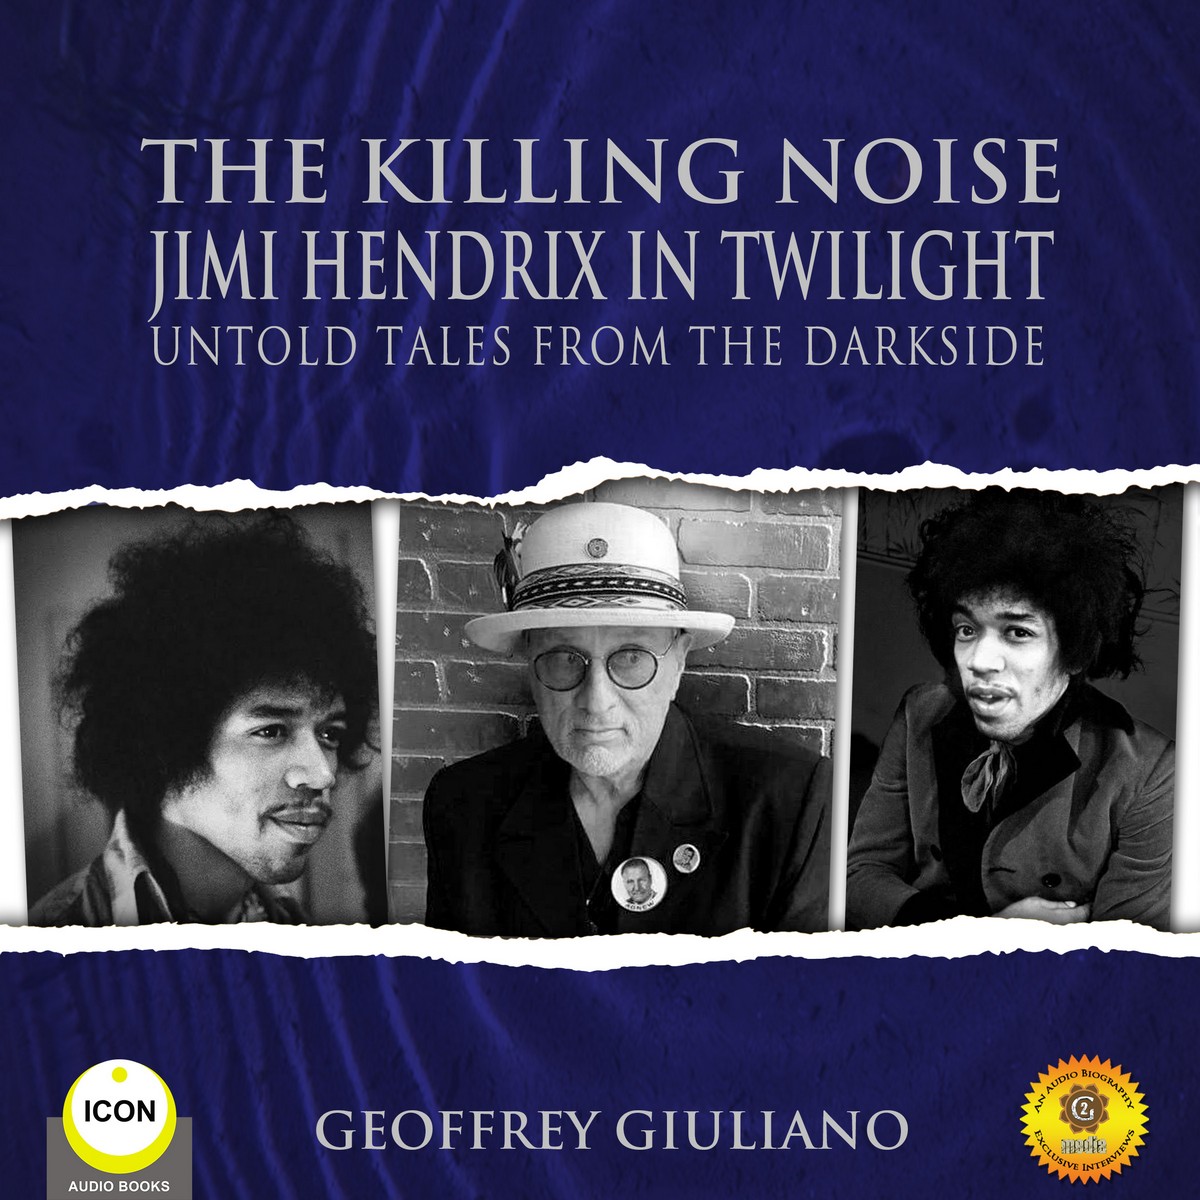 The Killing Noise Jimi Hendrix in Twilight – Untold Tales From the Darkside